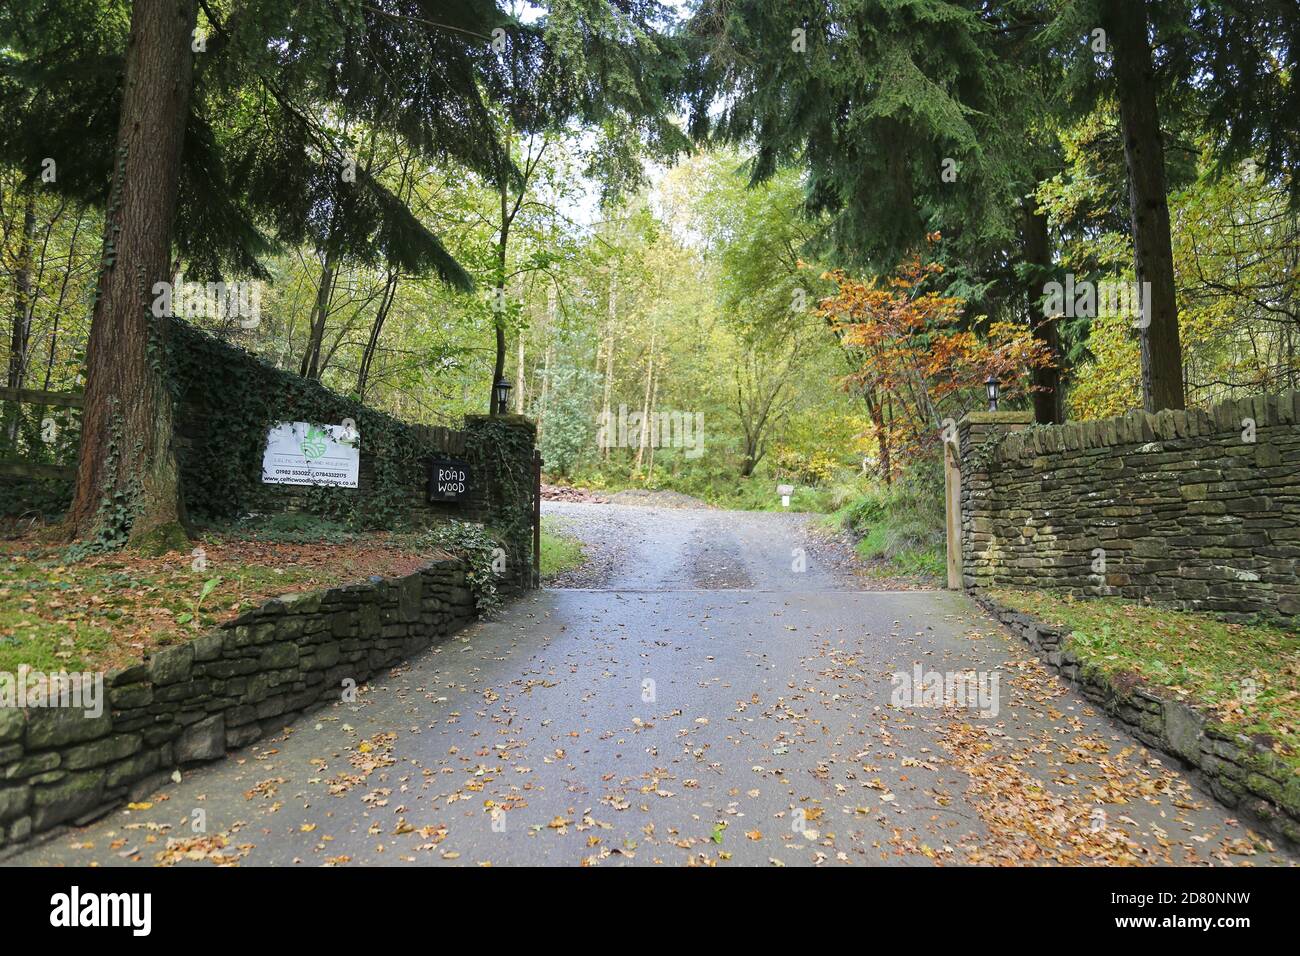 Entrance driveway, Celtic Woodland Holidays, Road Wood, Builth Wells, Brecknockshire, Powys, Wales, Great Britain, United Kingdom, UK, Europe Stock Photo